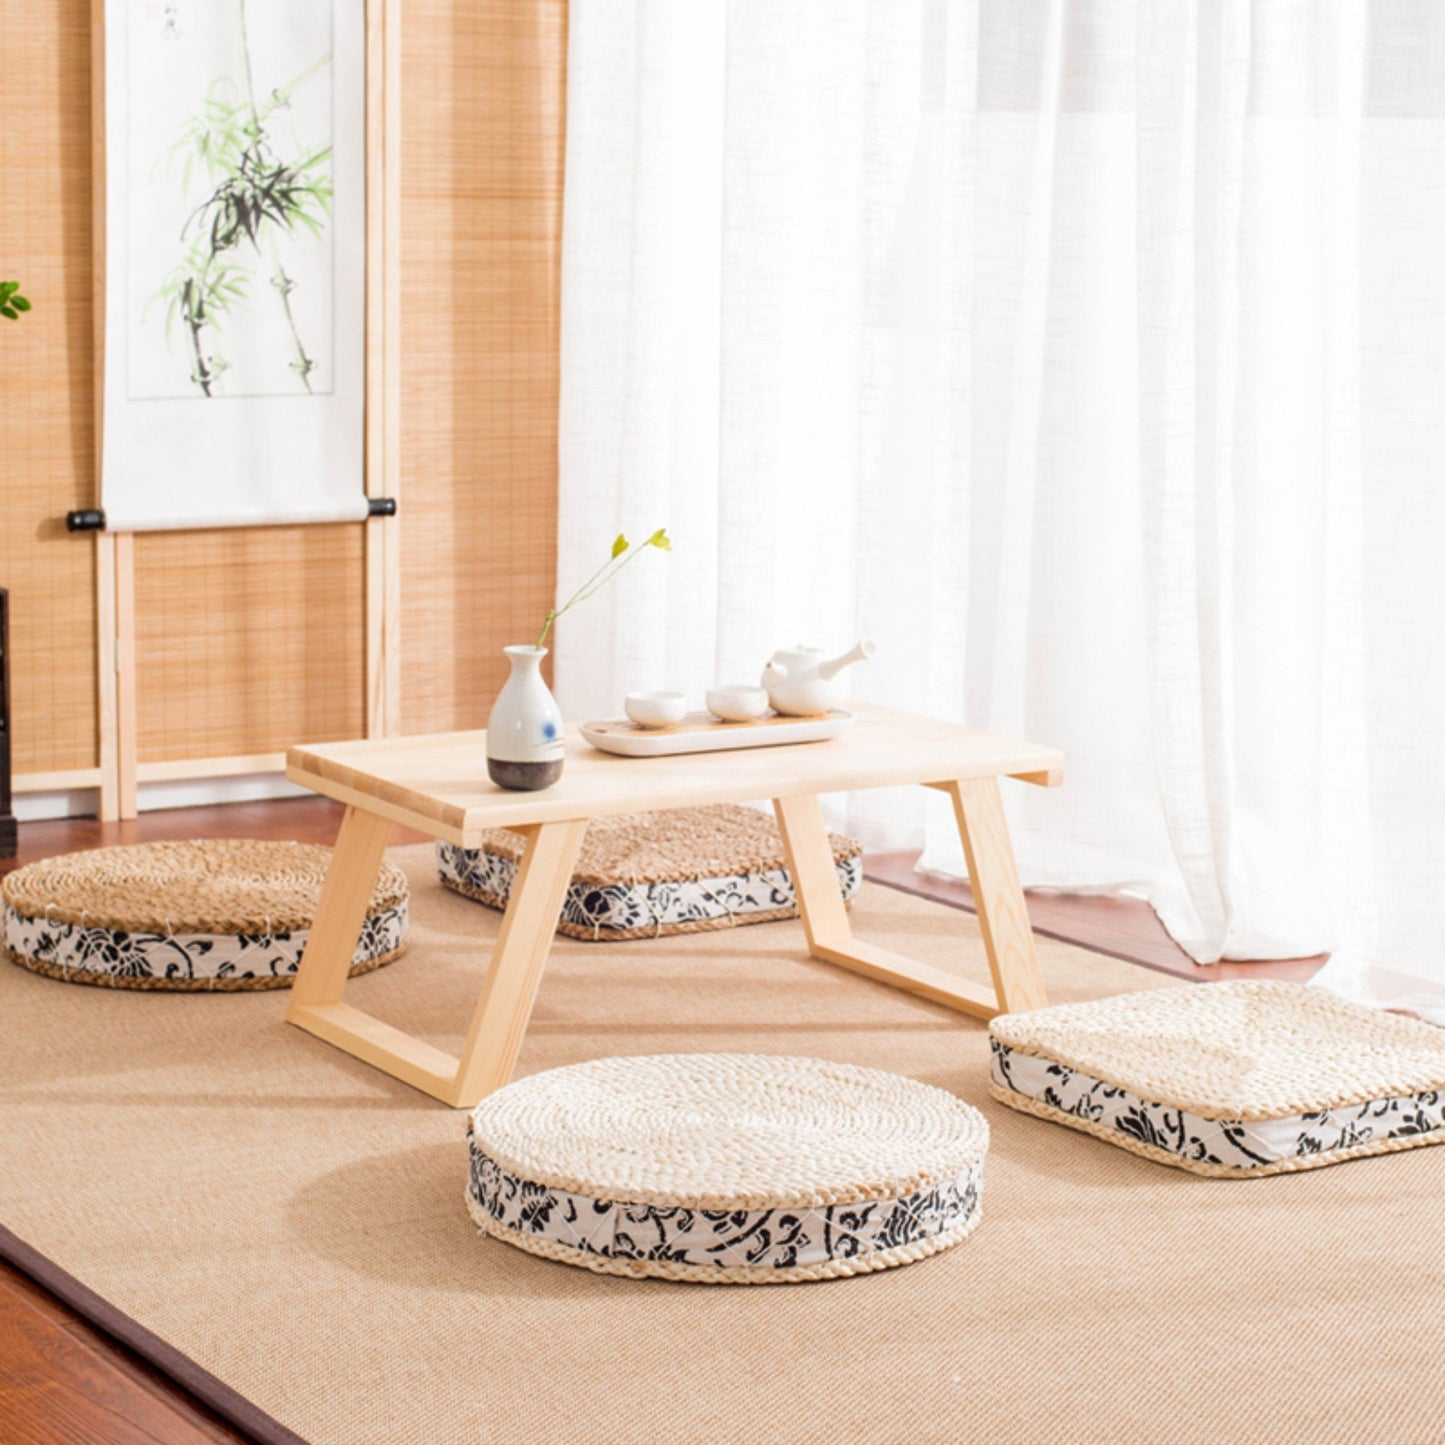 Straw Floor Pouf With Fabric Decor | Boho decor, Outdoor Pillow, Tea Ceremony, Ottoman Pouf, Rustic Decor, Natural Fabrics - -